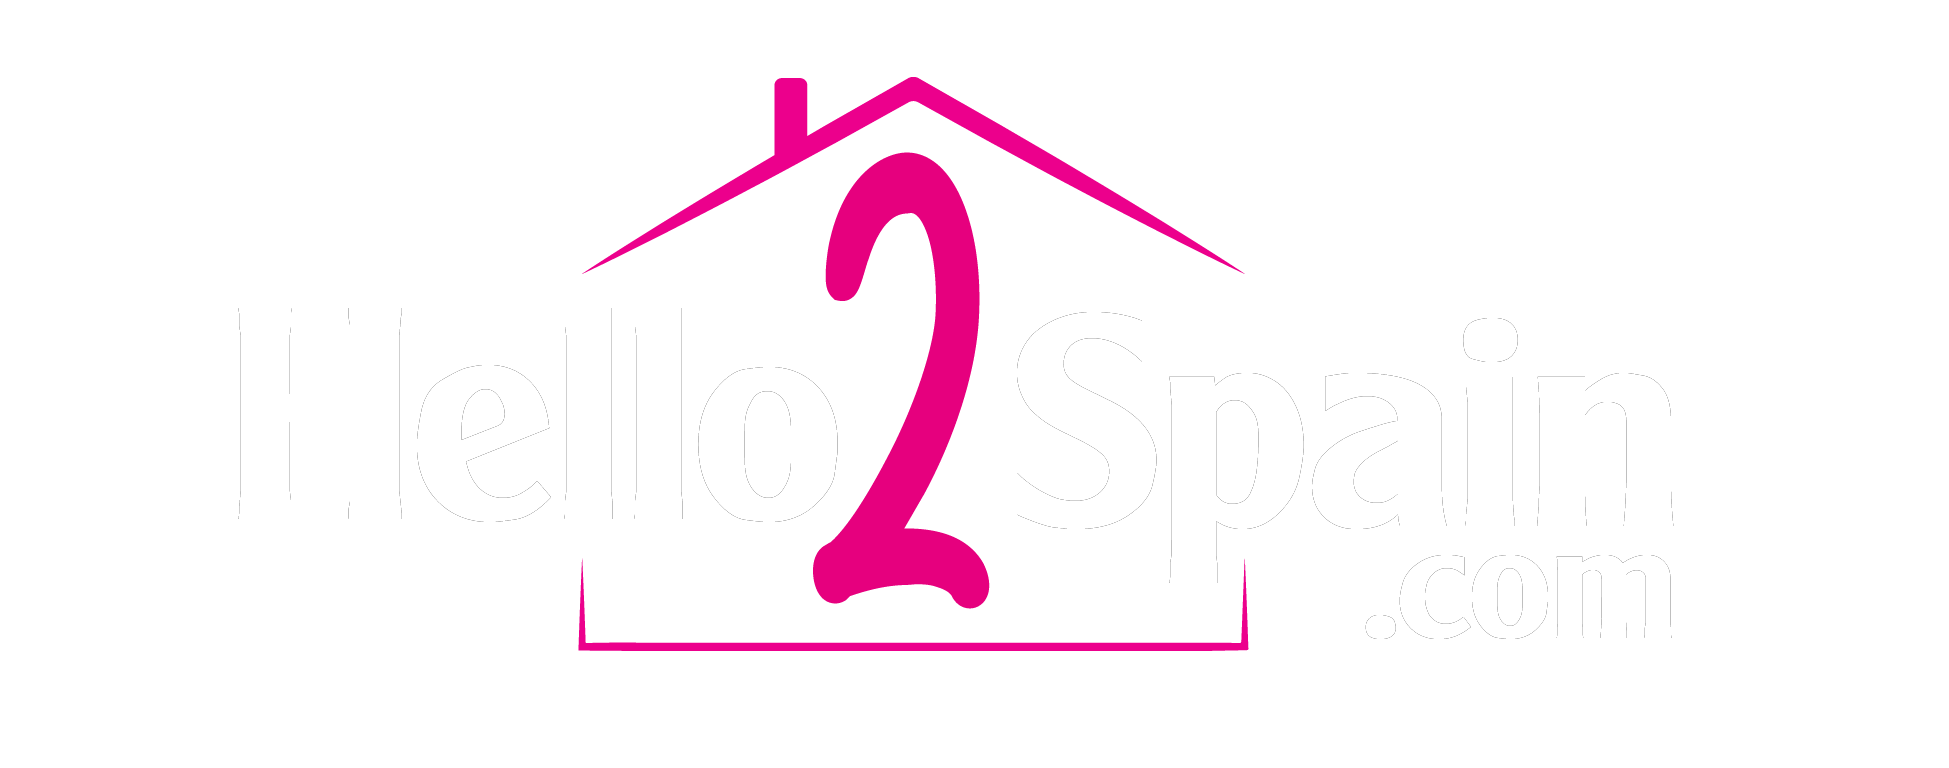 Hello2Spain | Properties for Sale in Spain, Costa Blanca North, Denia, Javea, La Sella, Oliva, Pego, Calpe